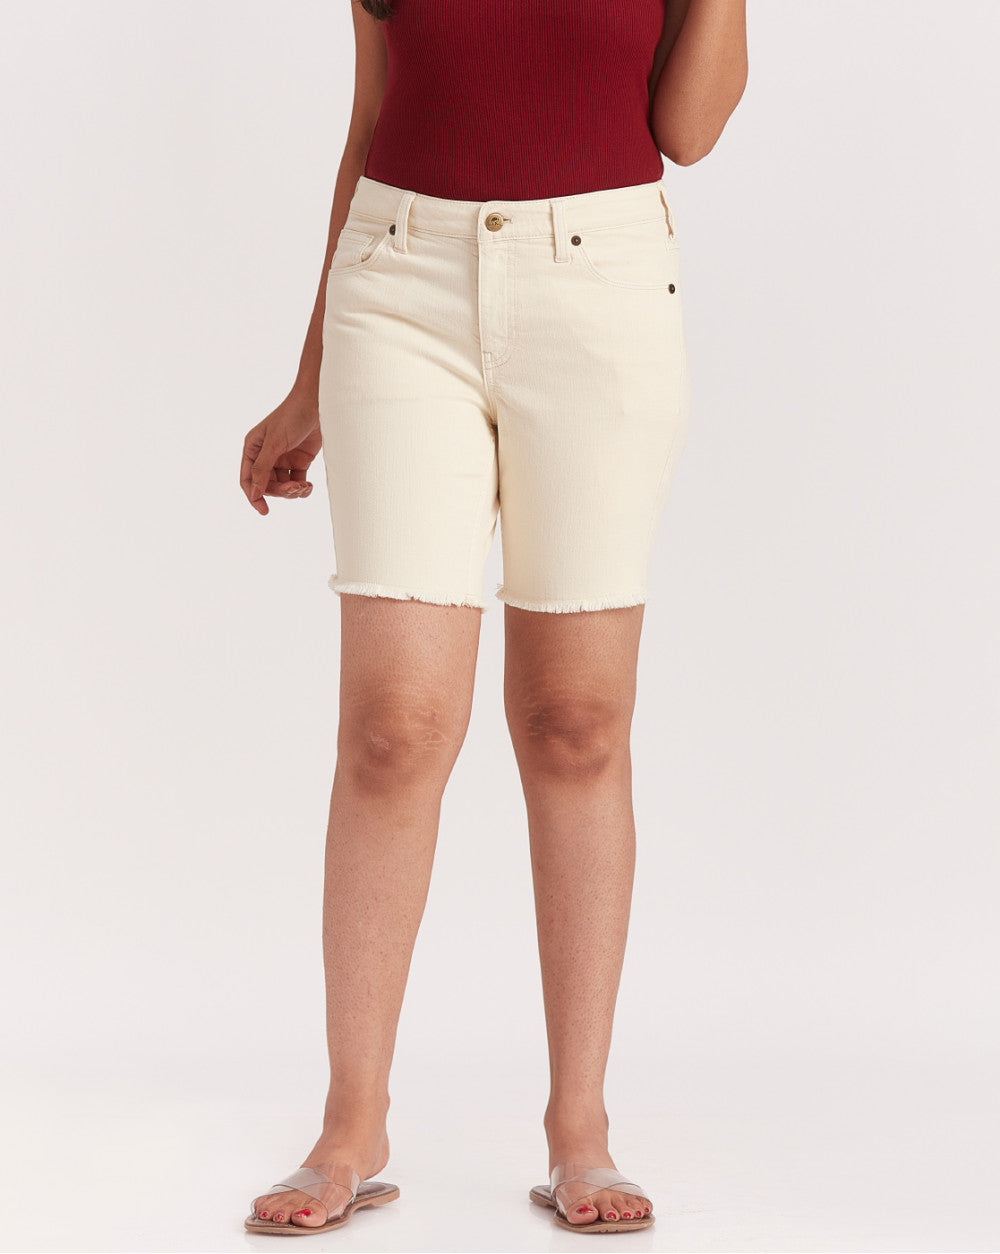 Mid Rise Colored Shorts - Cream